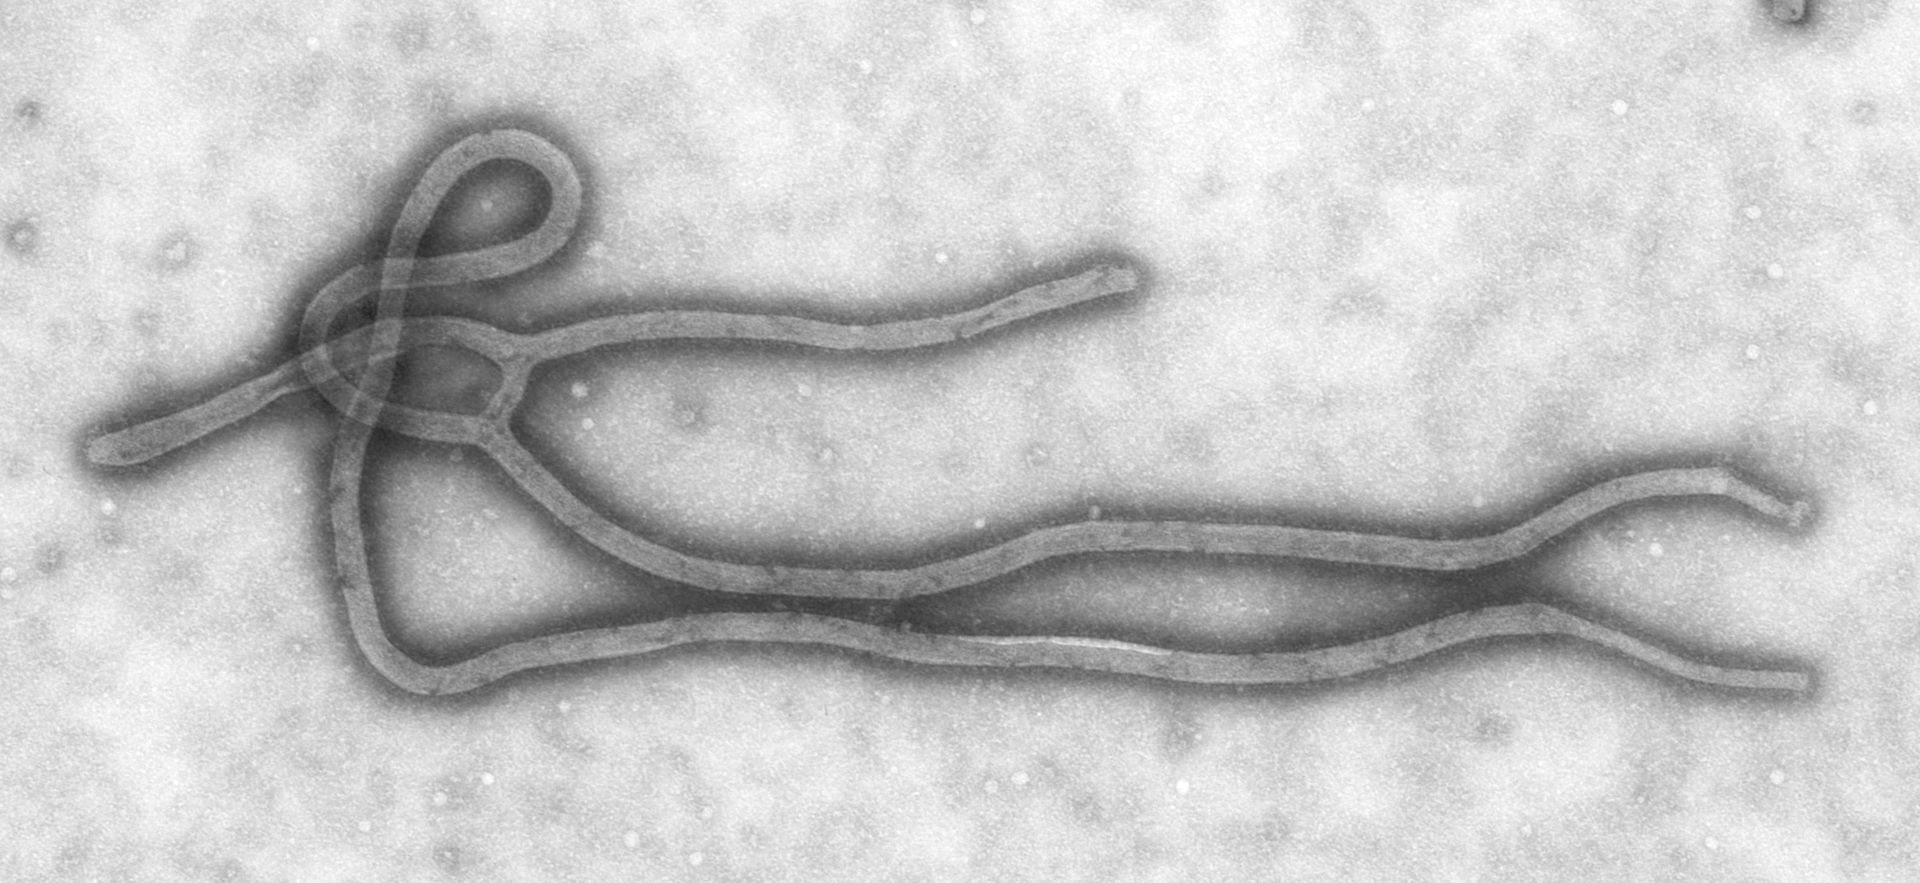 Le bilan d'Ebola s'alourdit